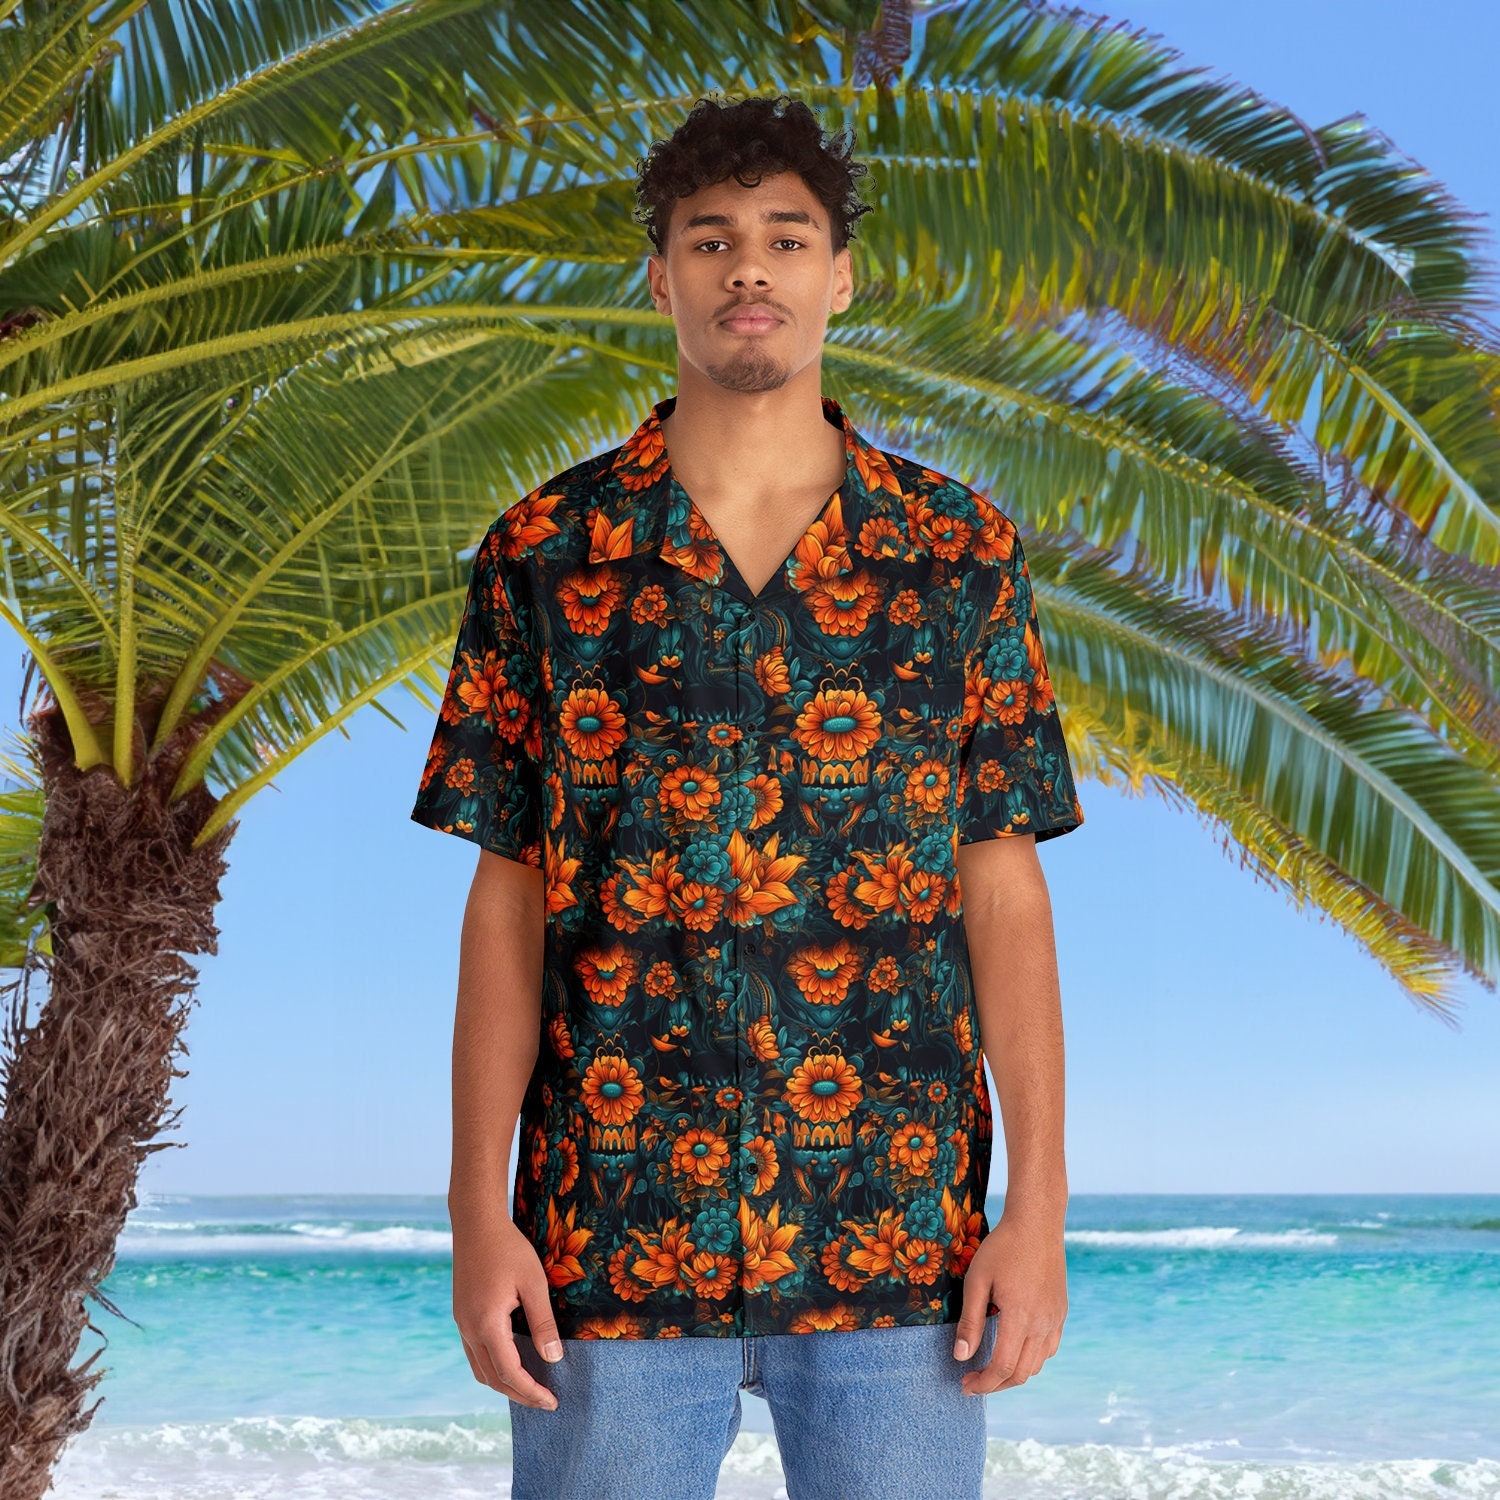 20% OFF Hot Sale Vintage New York Knicks Hawaiian Shirt For Men – 4 Fan Shop